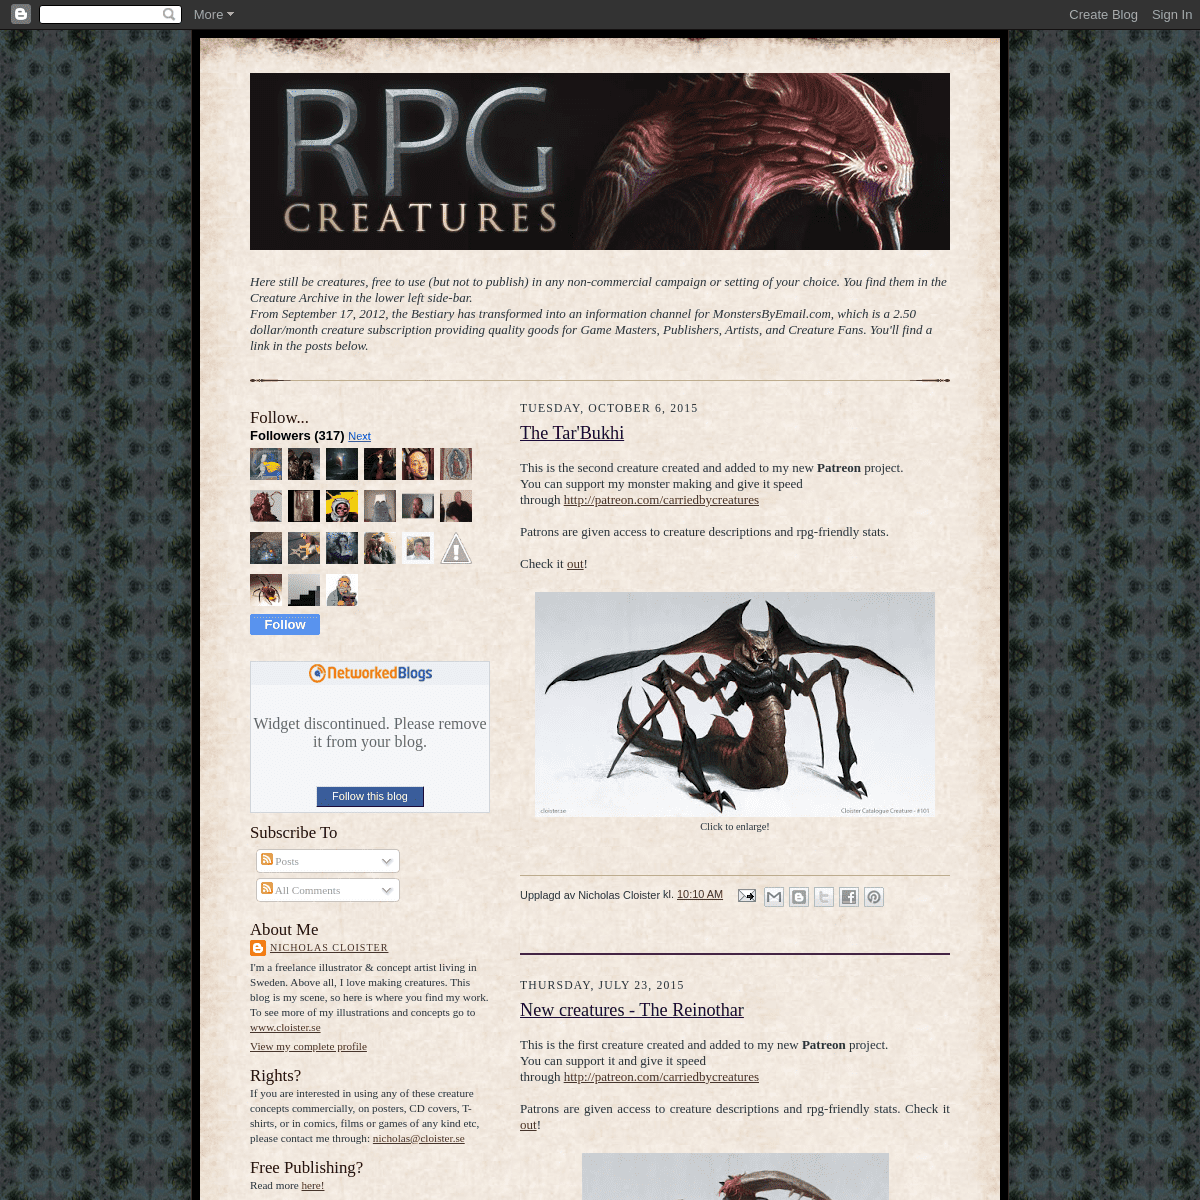 A complete backup of rpg-creatures.blogspot.com